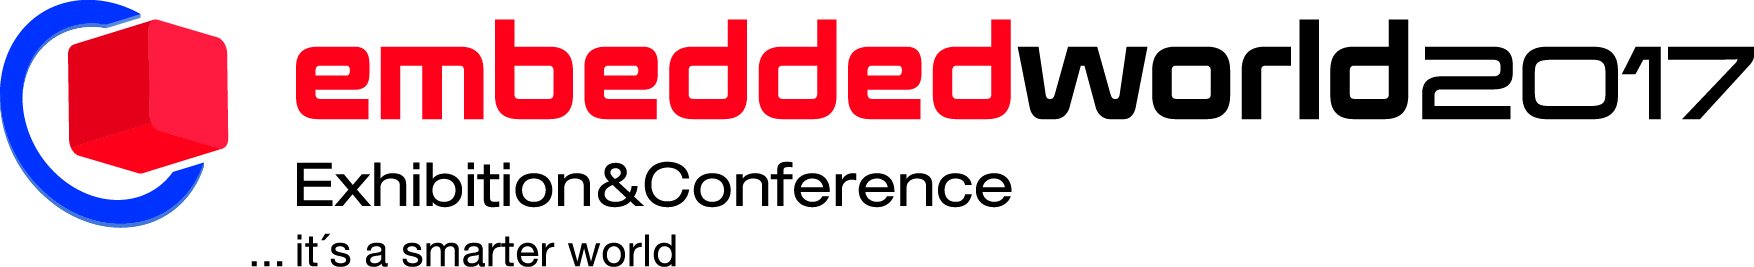 embedded logo insert